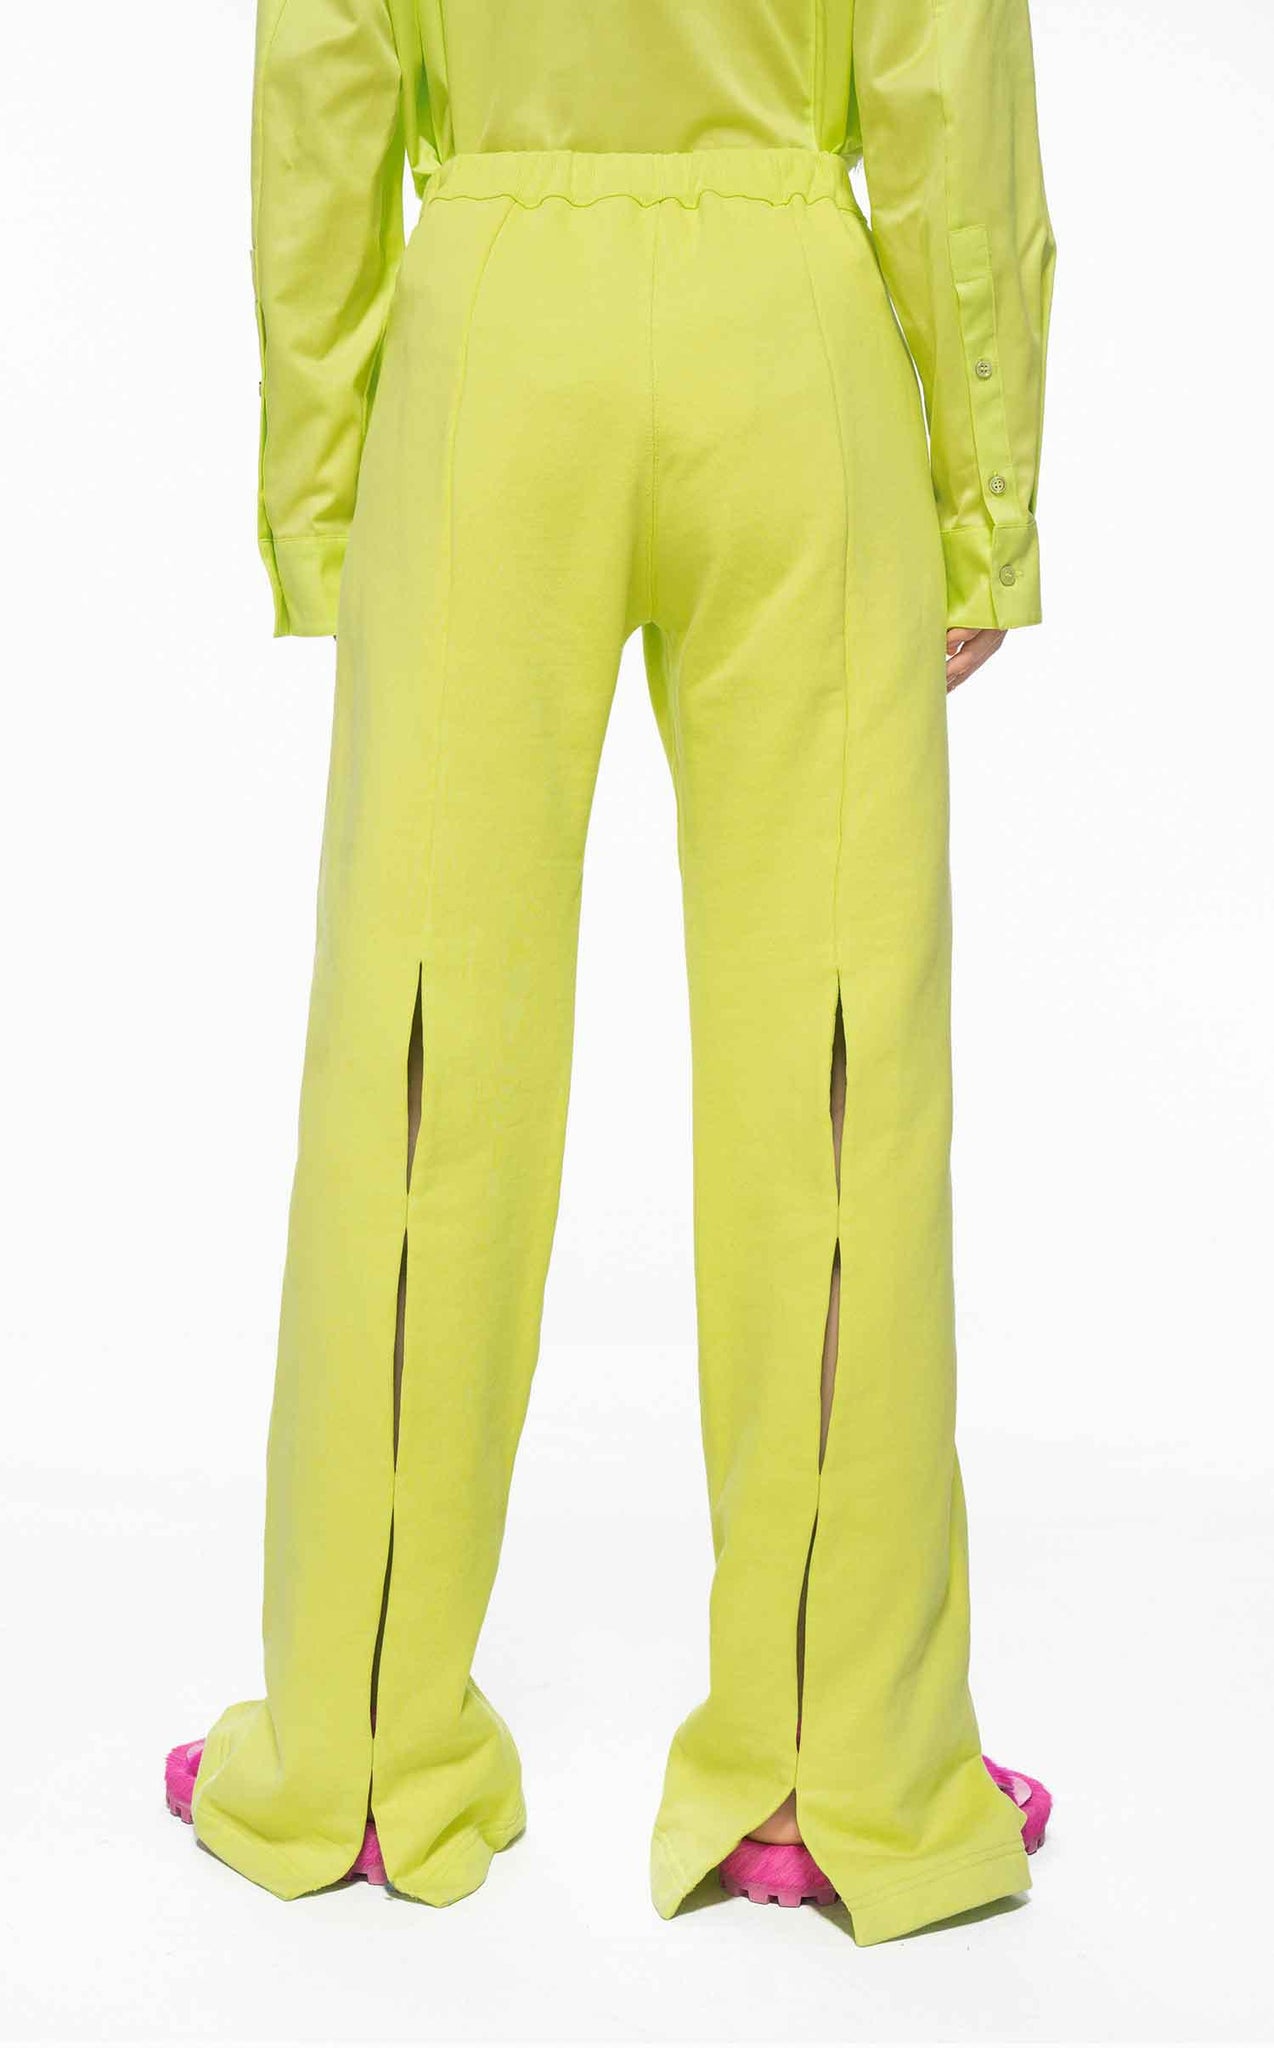 Pants / JNBY Loose Fit Fashion Cotton Casual Pants